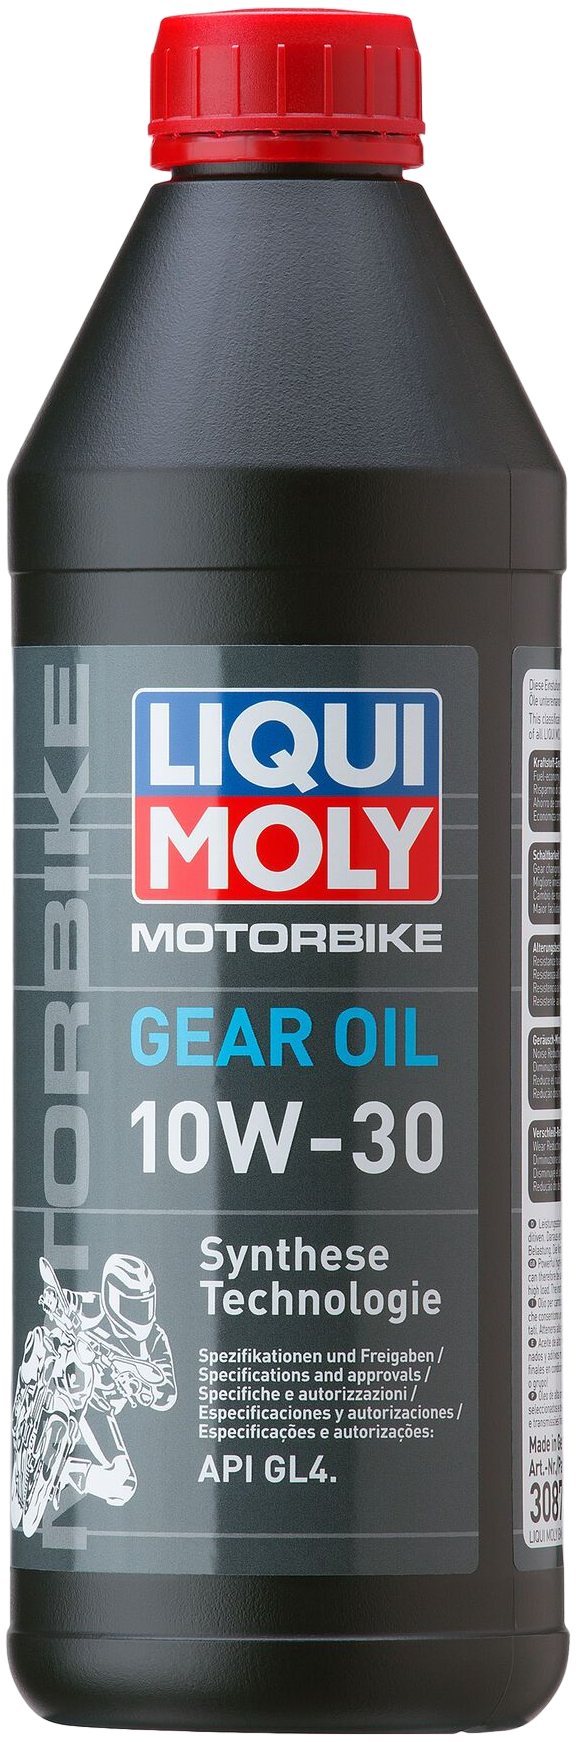 Liqui Moly Motorbike Gear Oil 10W-30, 1 lt